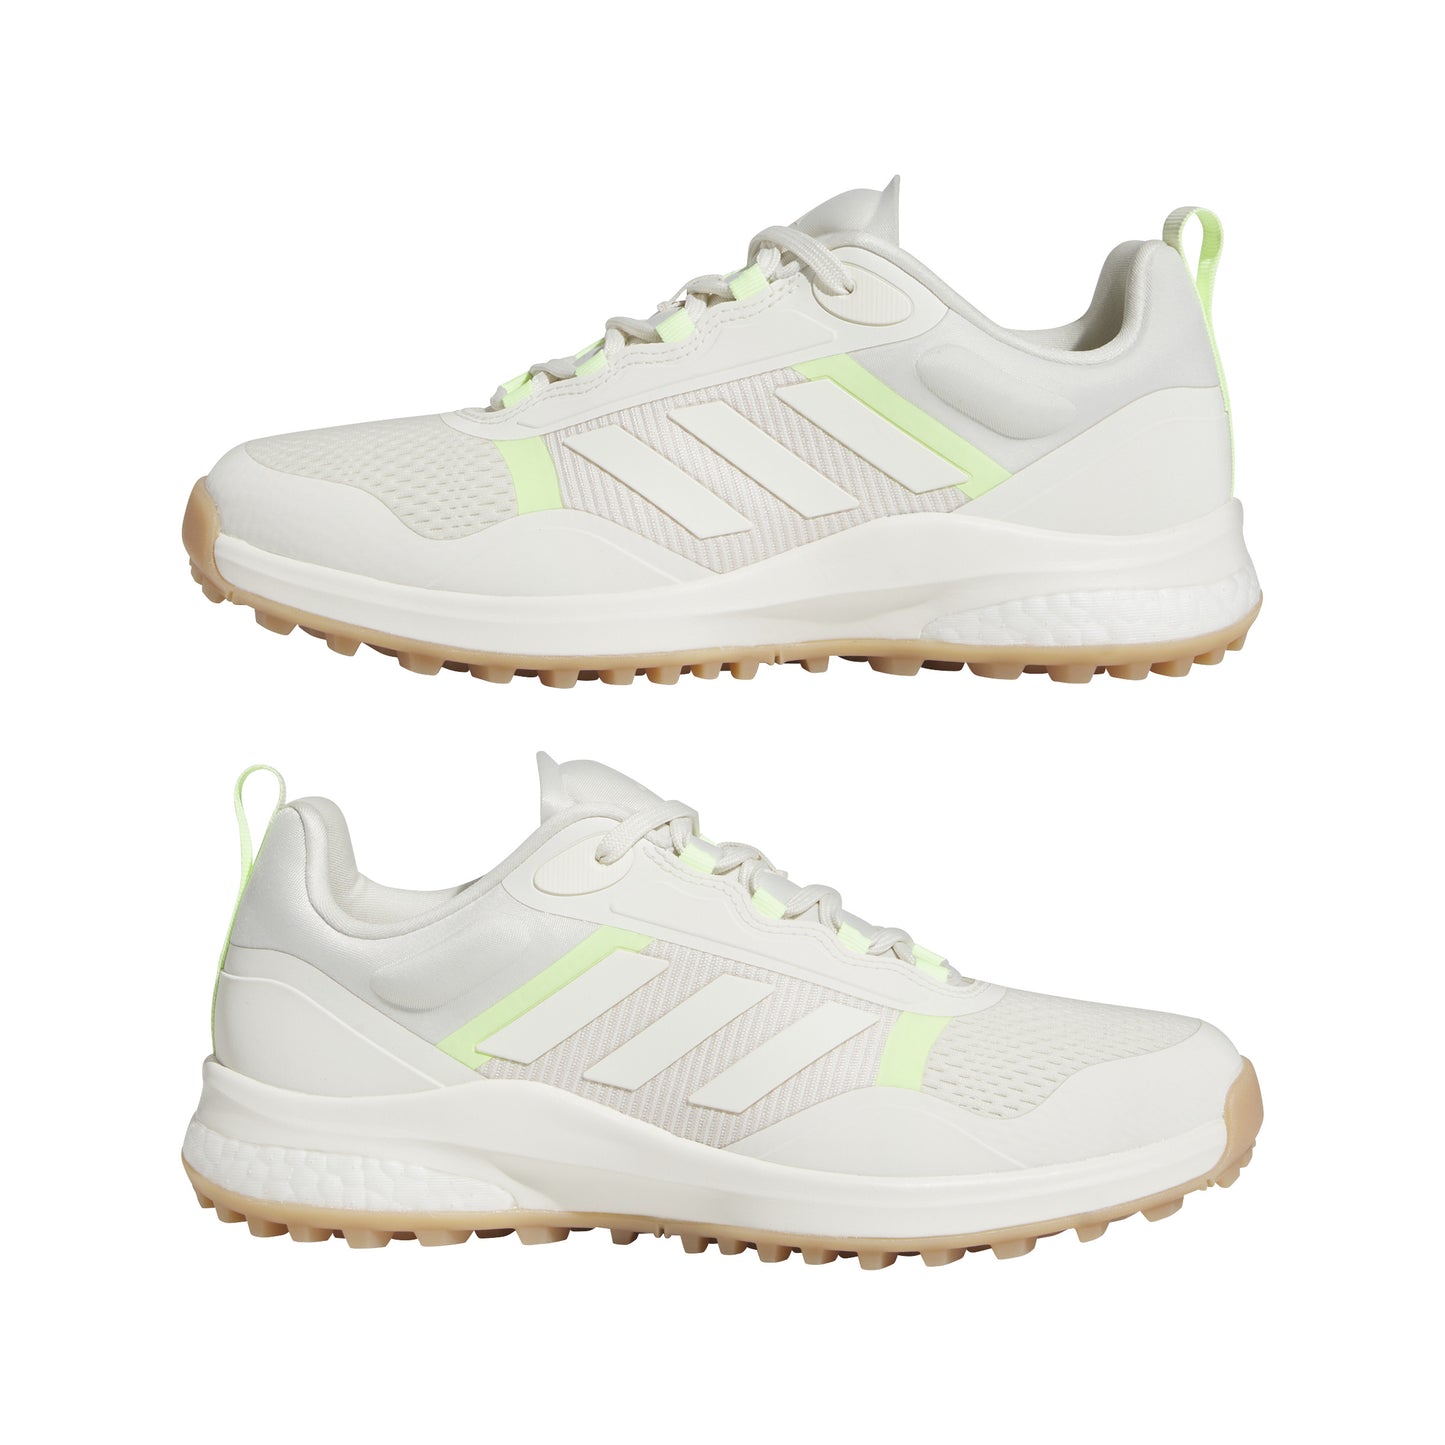 adidas Women's Spikeless Golf Shoe with Fluorescent Lime Green Detailing